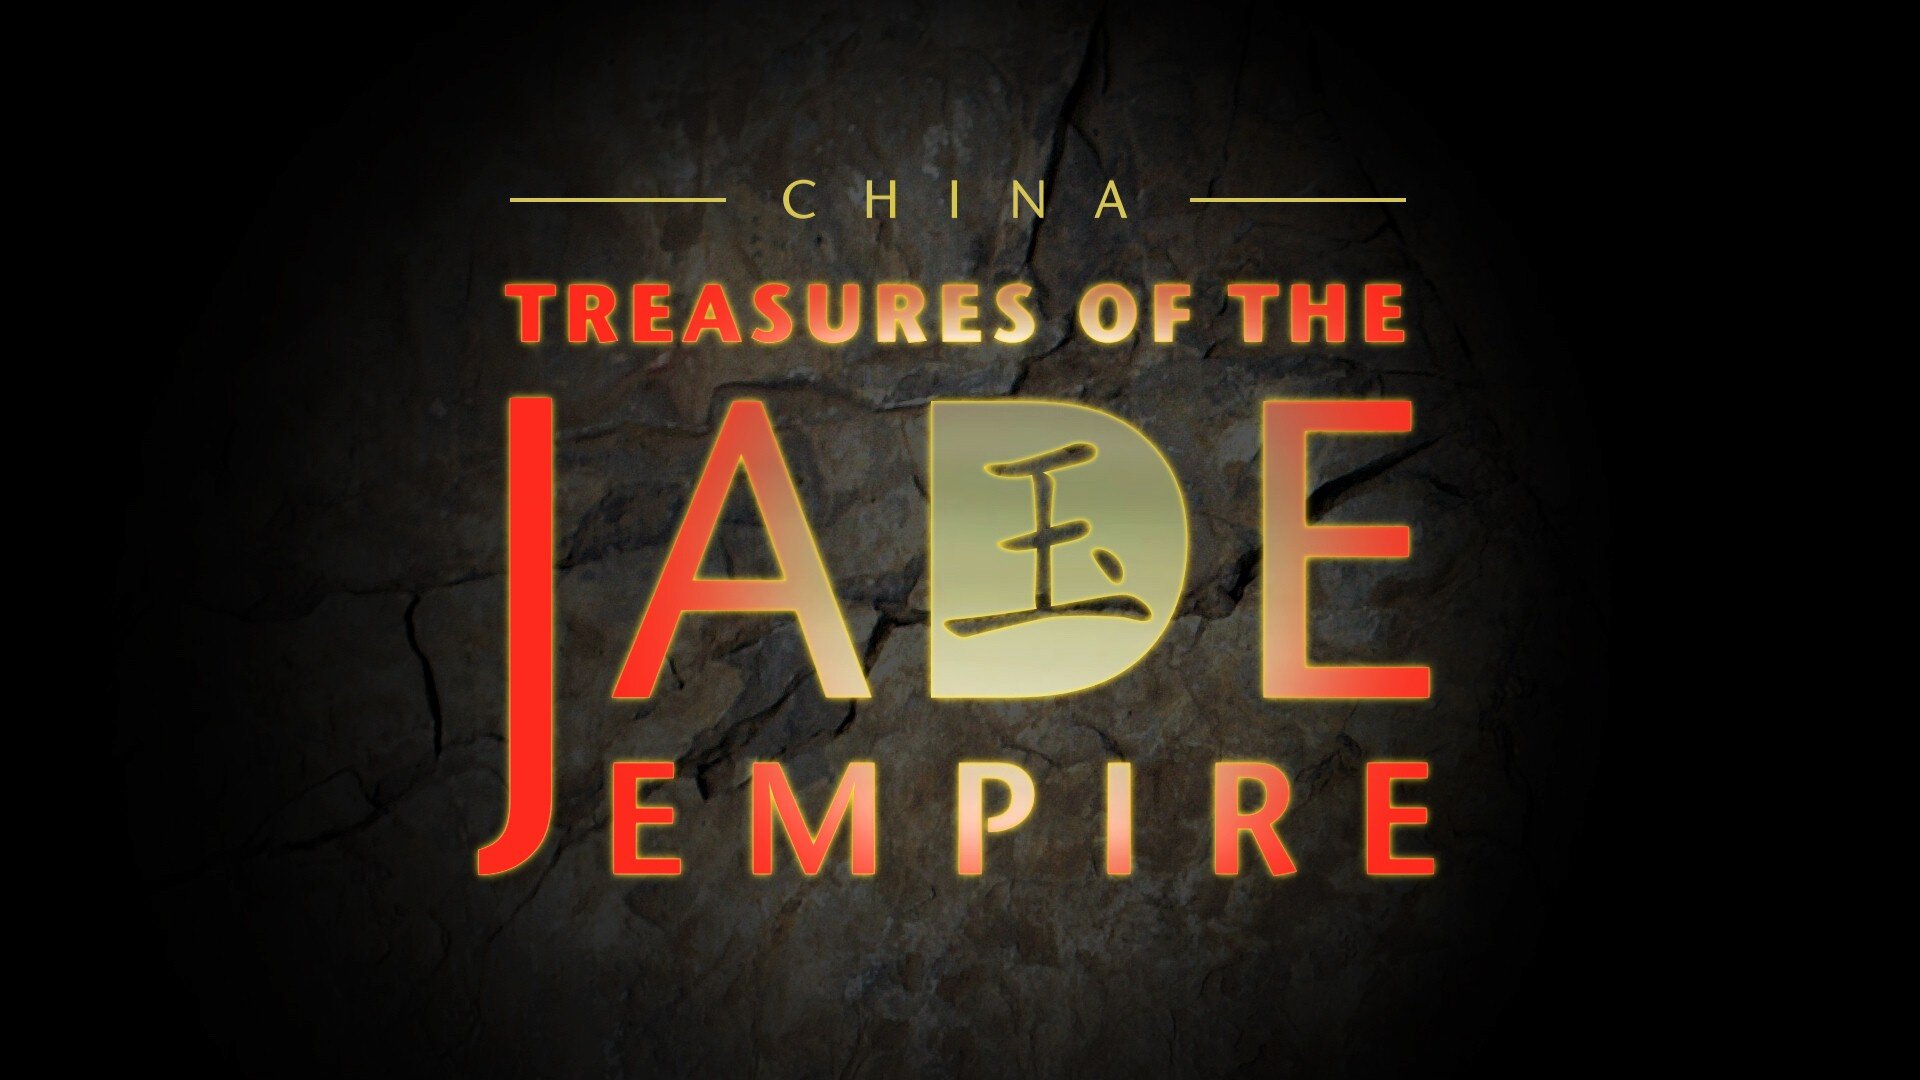 China-TreasuresOfTheJadeEmpire2.jpg